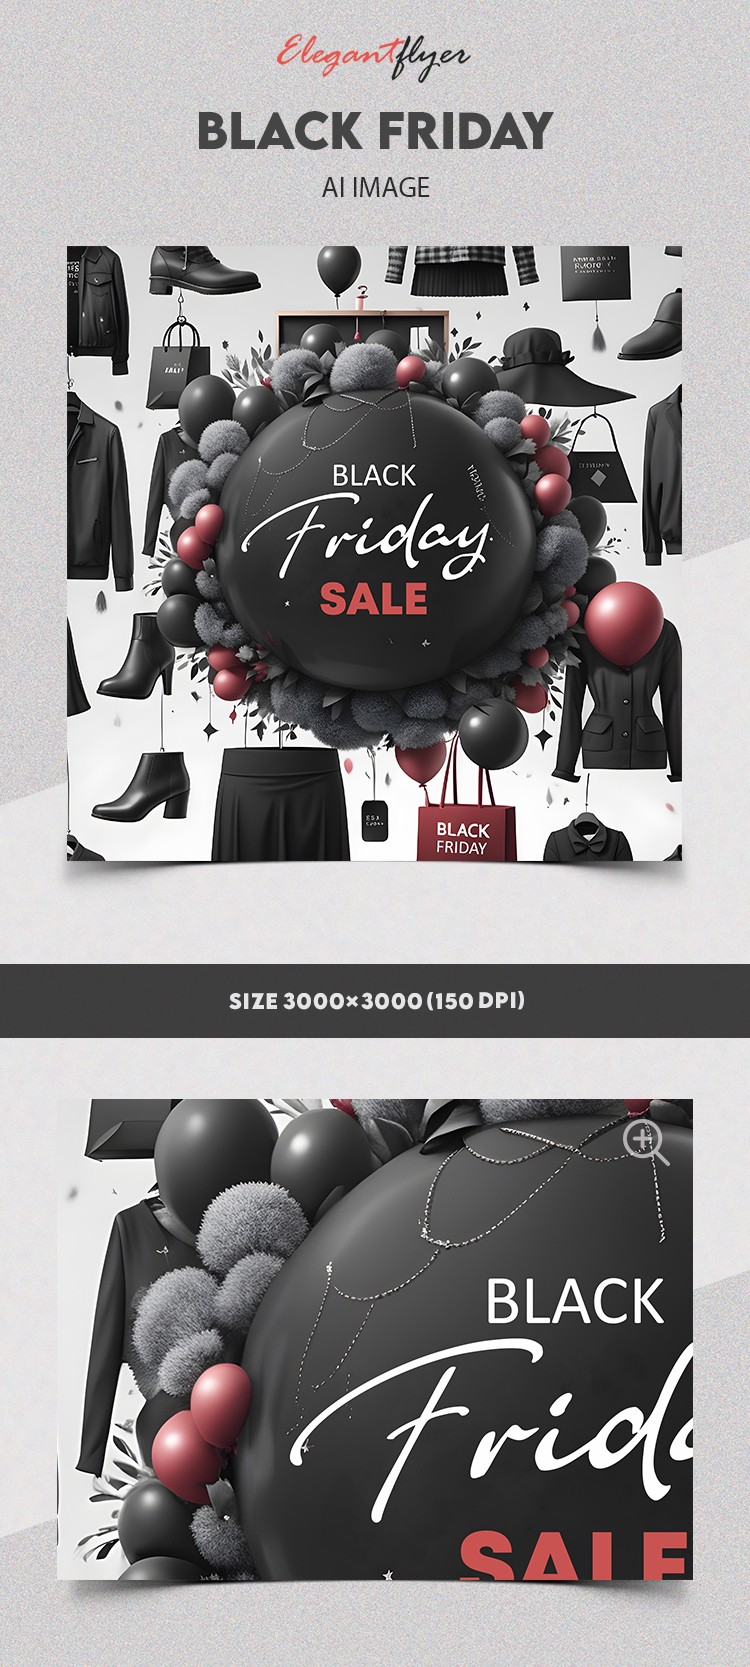 Black Friday Sale by ElegantFlyer